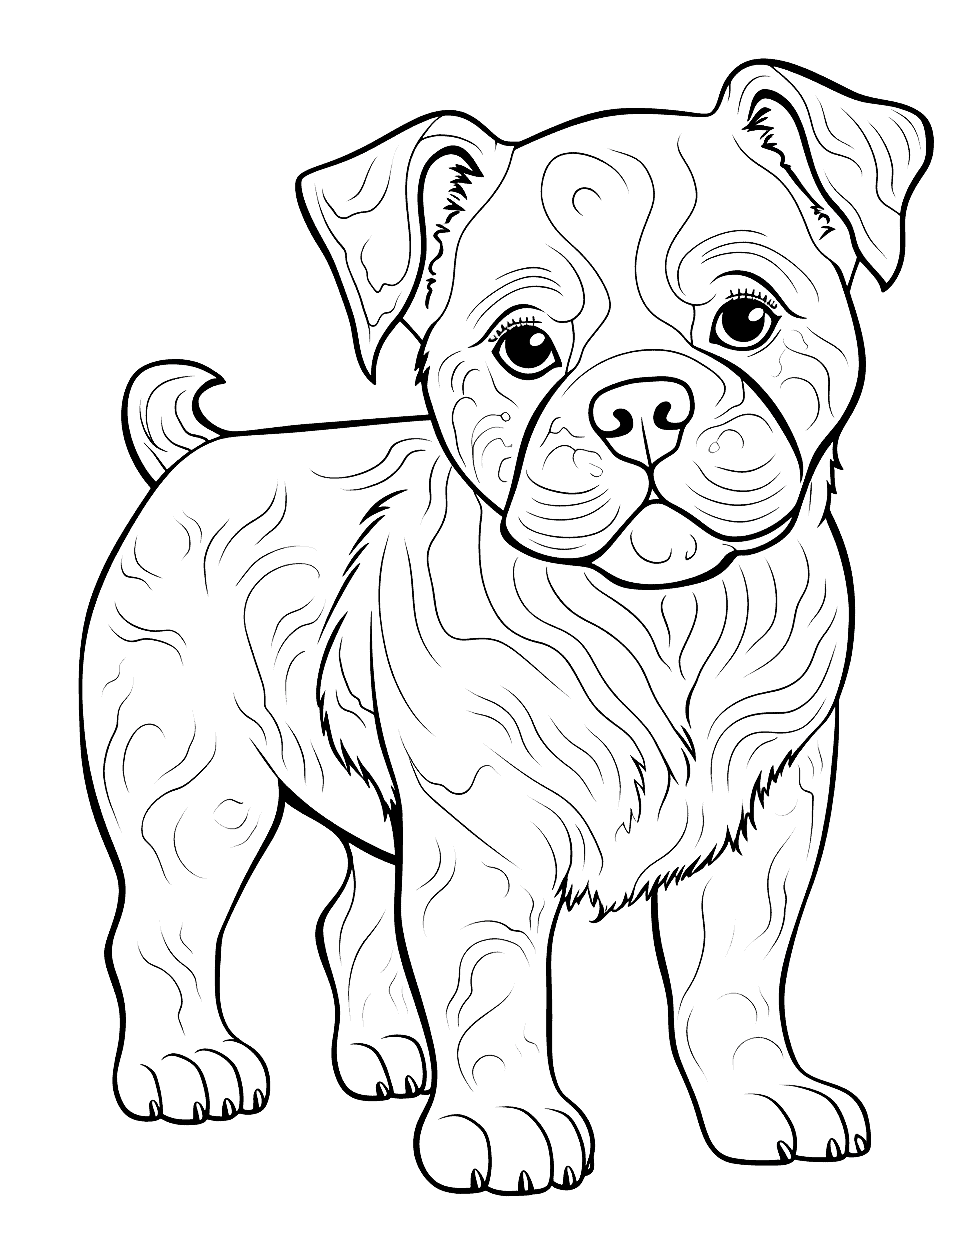 Detailed Artwork Intricate Bulldog Design Puppy Coloring Page - An intricate, detailed artwork of a Bulldog puppy for more advanced colorers.